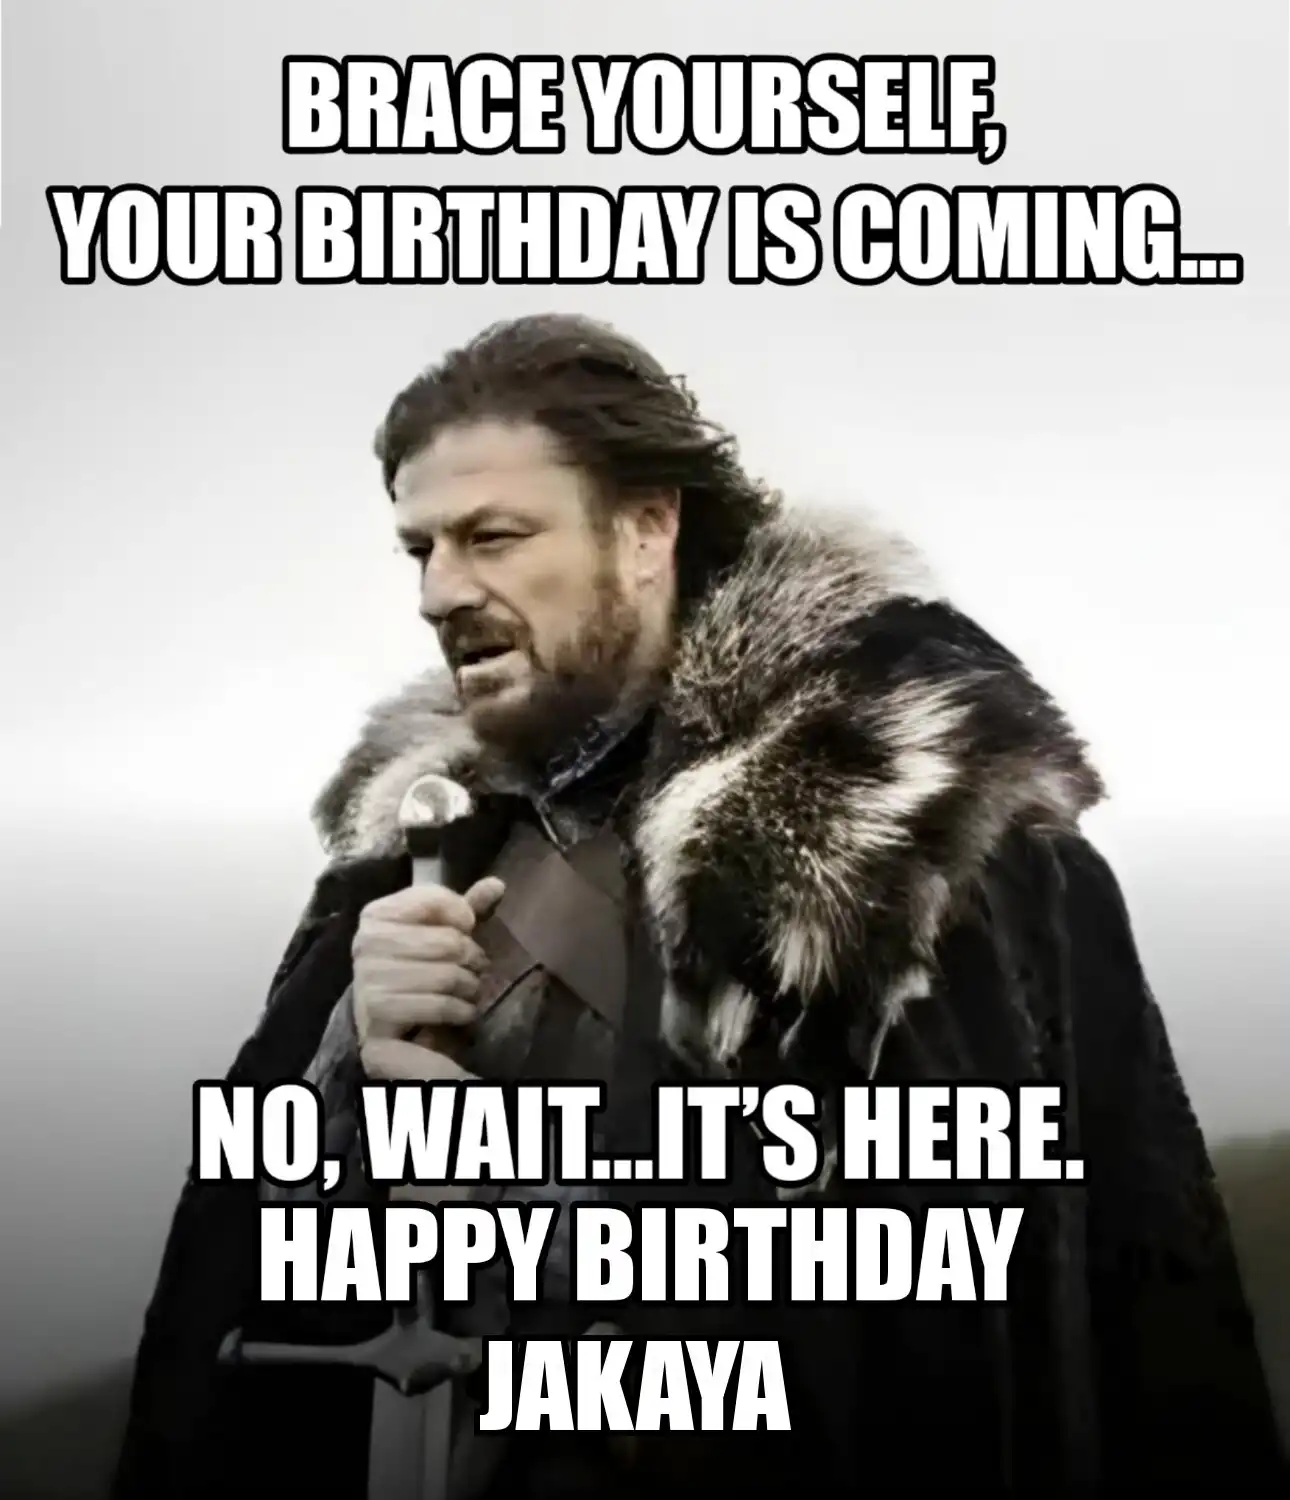 Happy Birthday Jakaya Brace Yourself Your Birthday Is Coming Meme